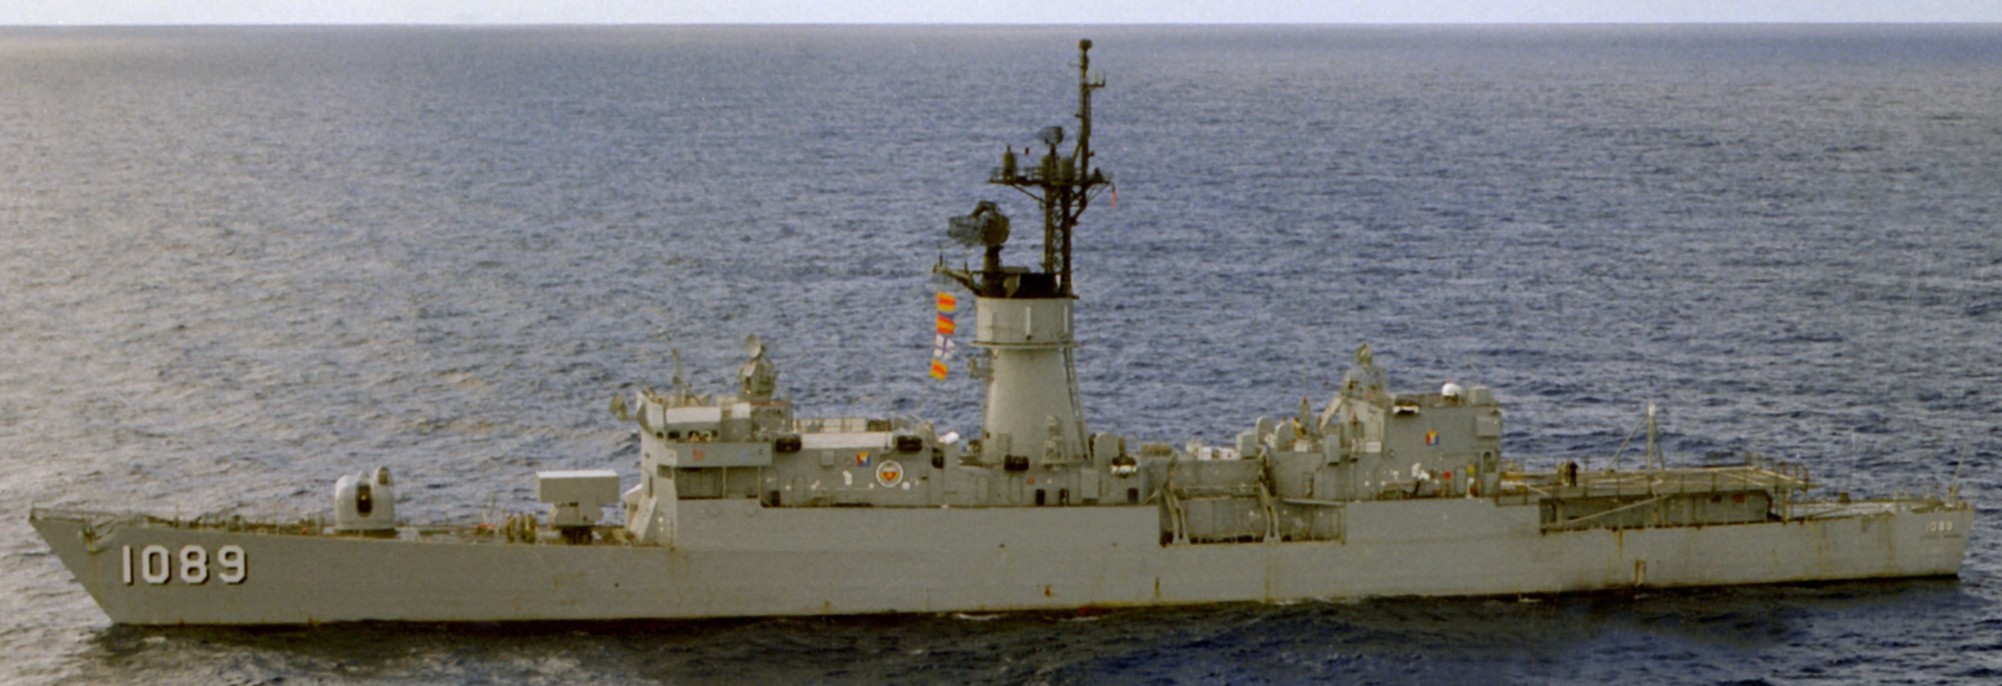 damiyat knox class frigate egyptian naval force 02x